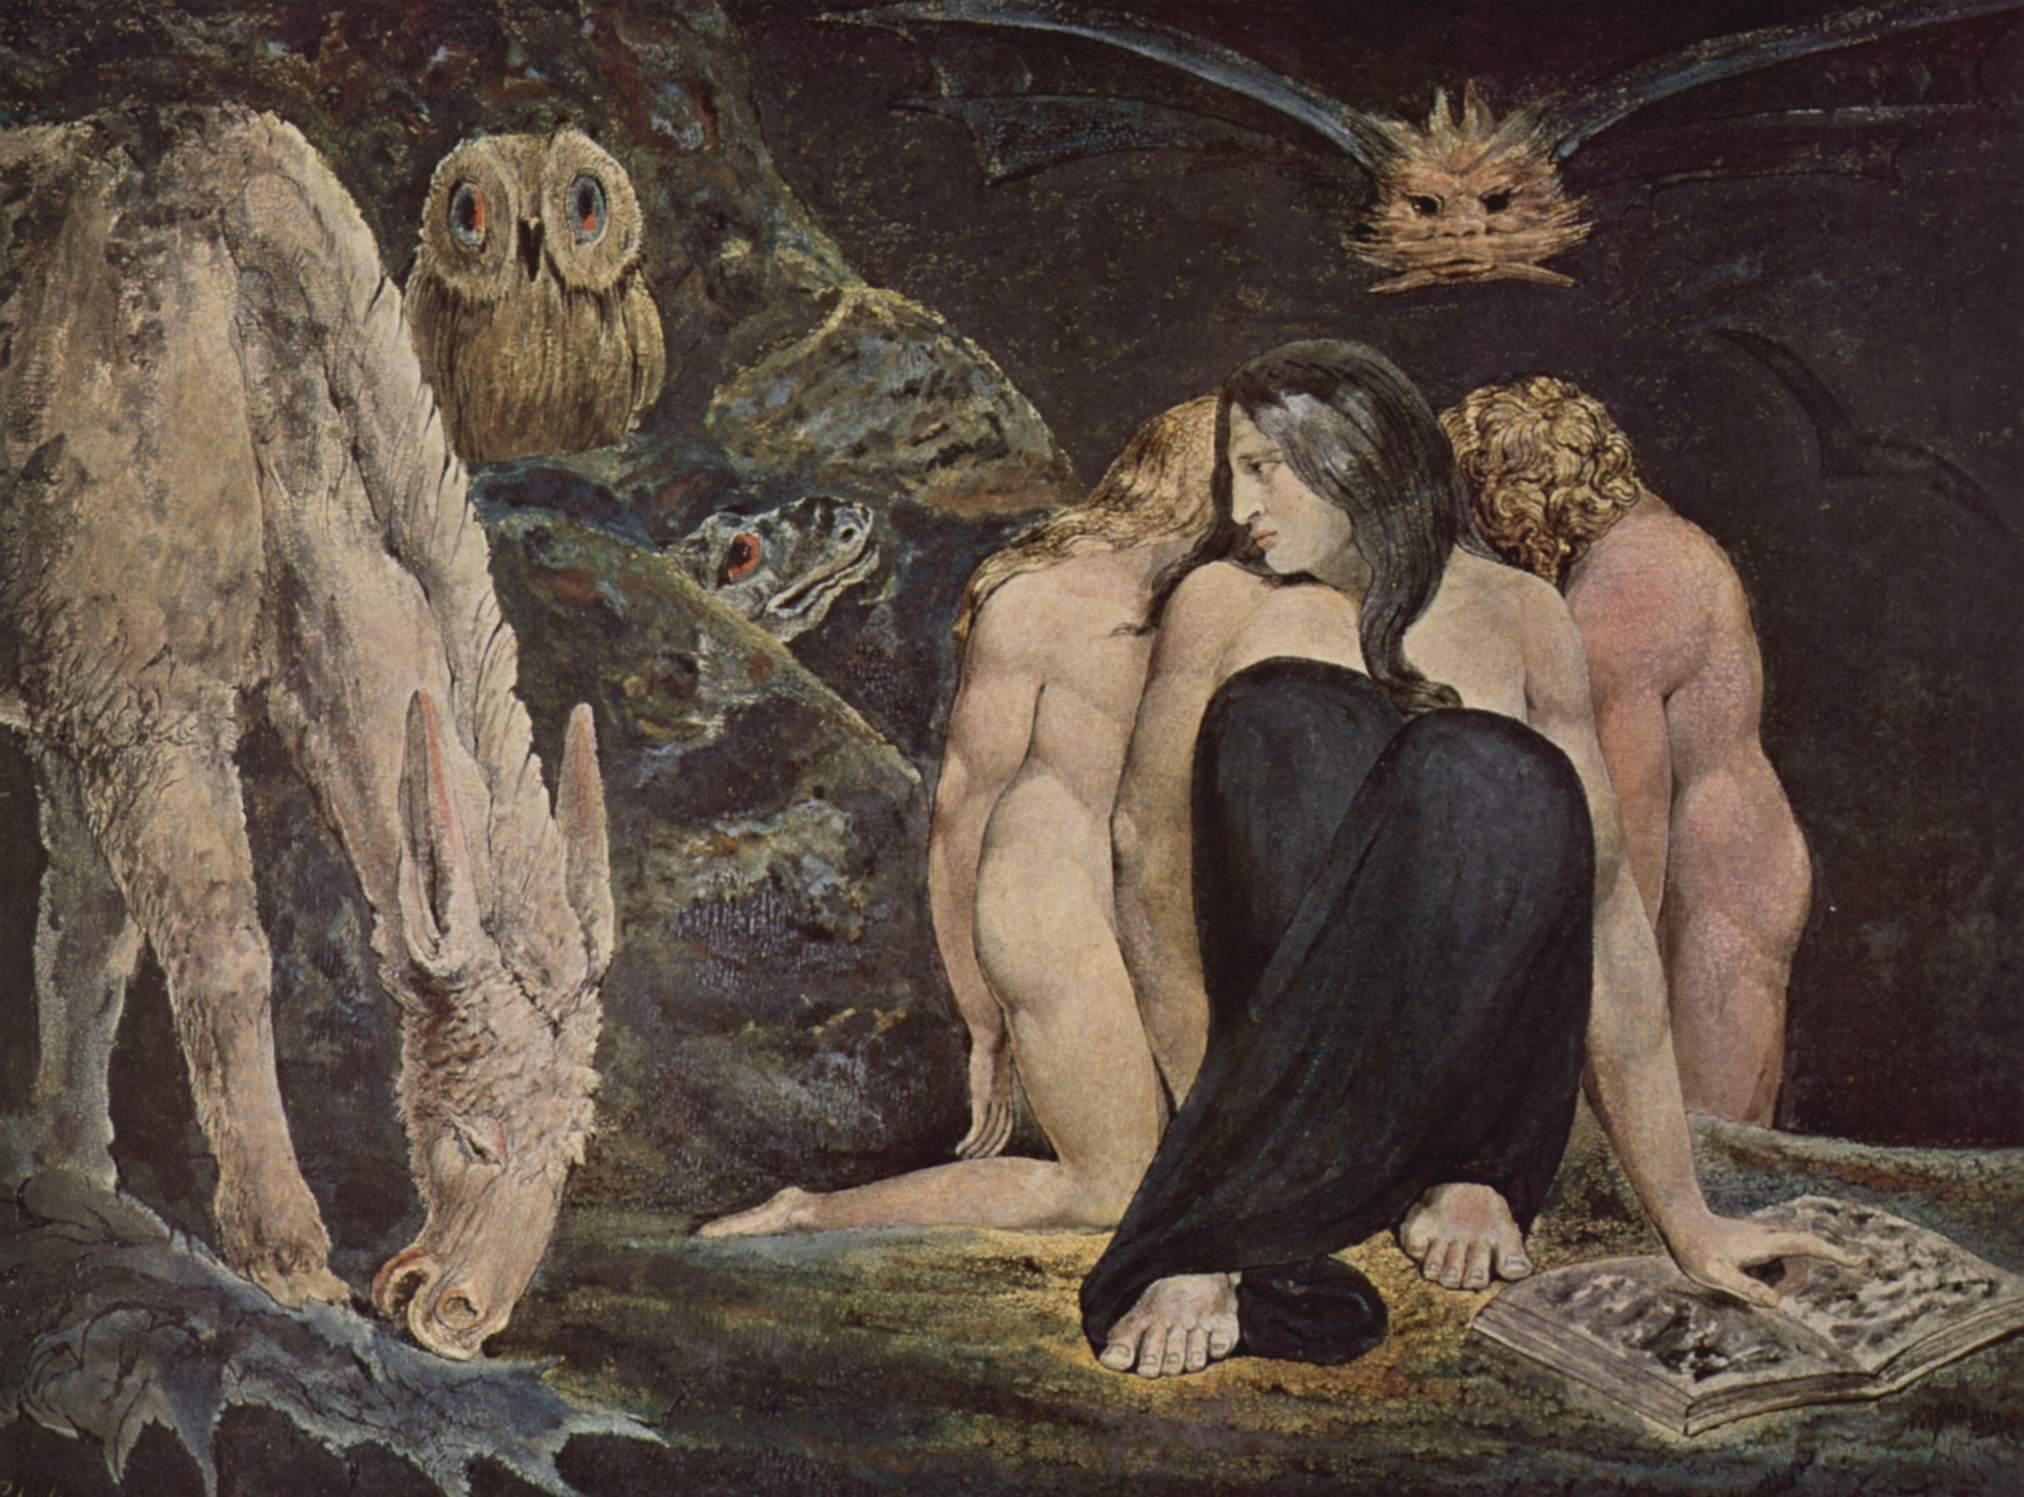 William Blake, Public domain, via Wikimedia Commons